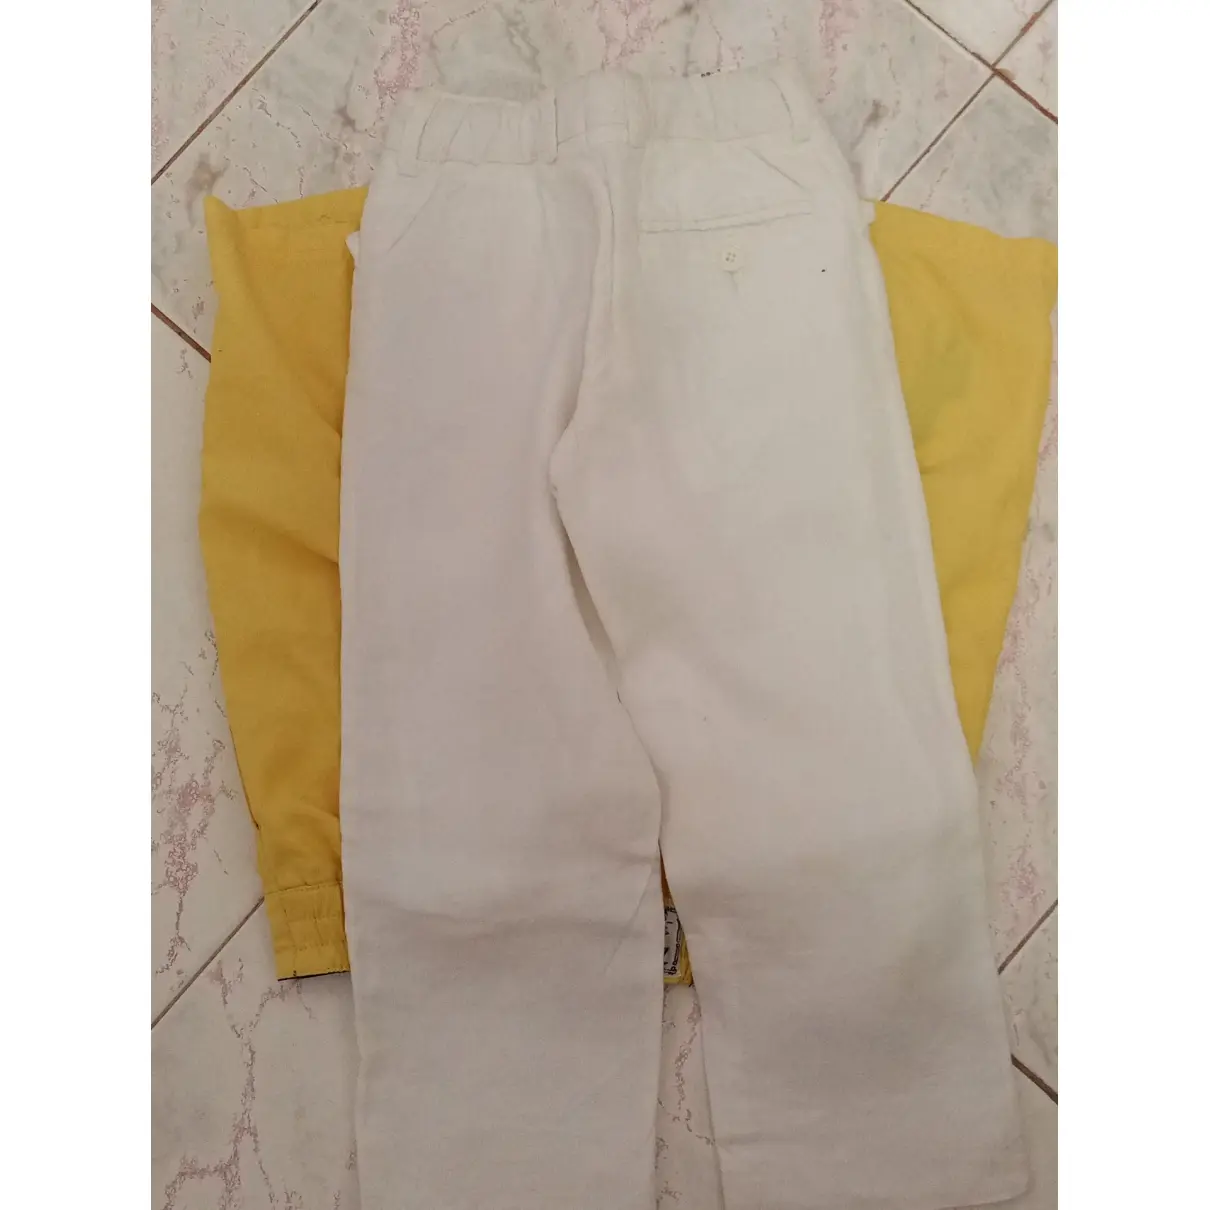 Fay Linen pants for sale